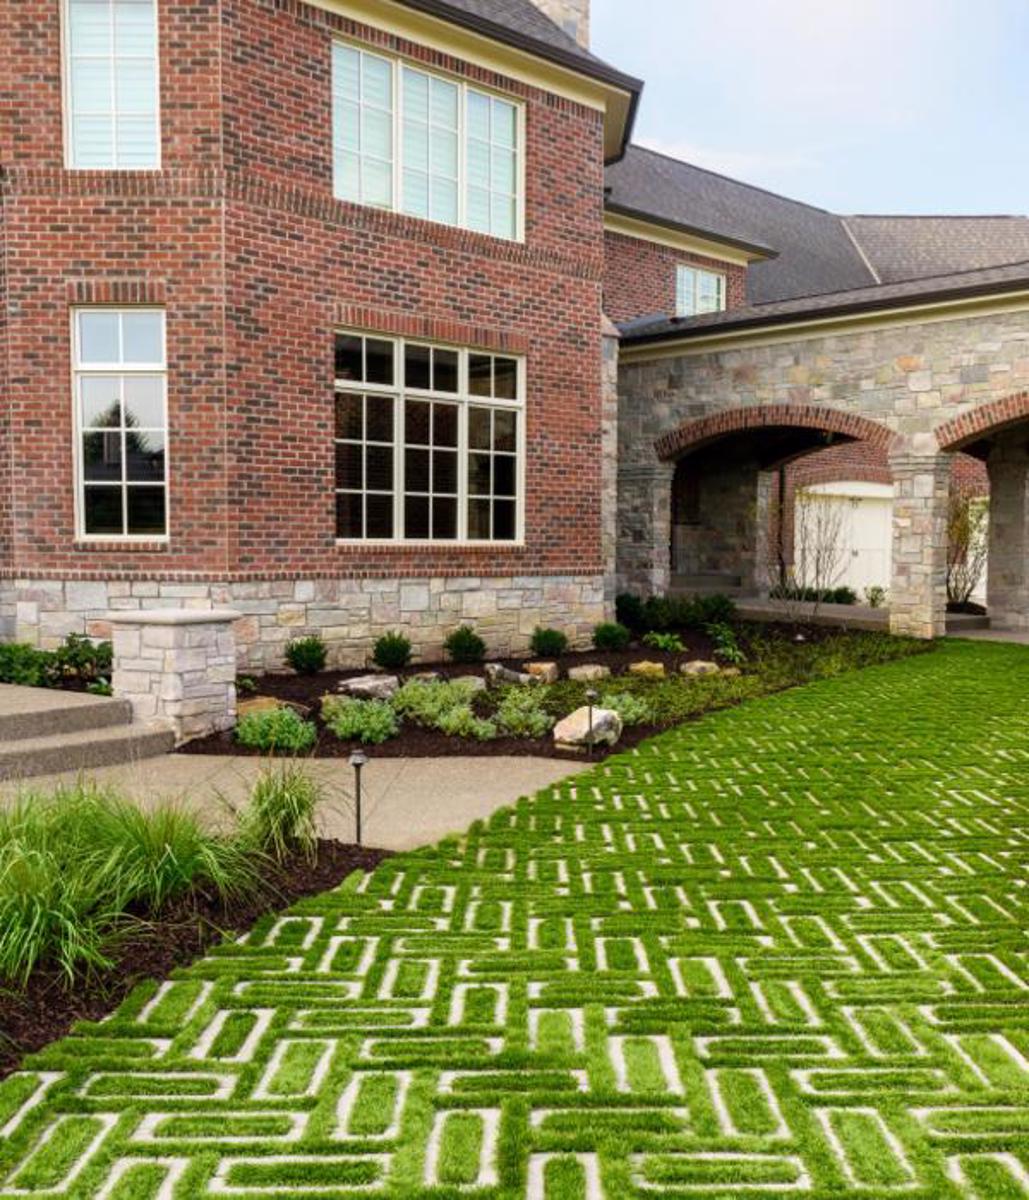 Techo bloc permeable pavement frontyard walkway pavers grass aquastorm grey img1